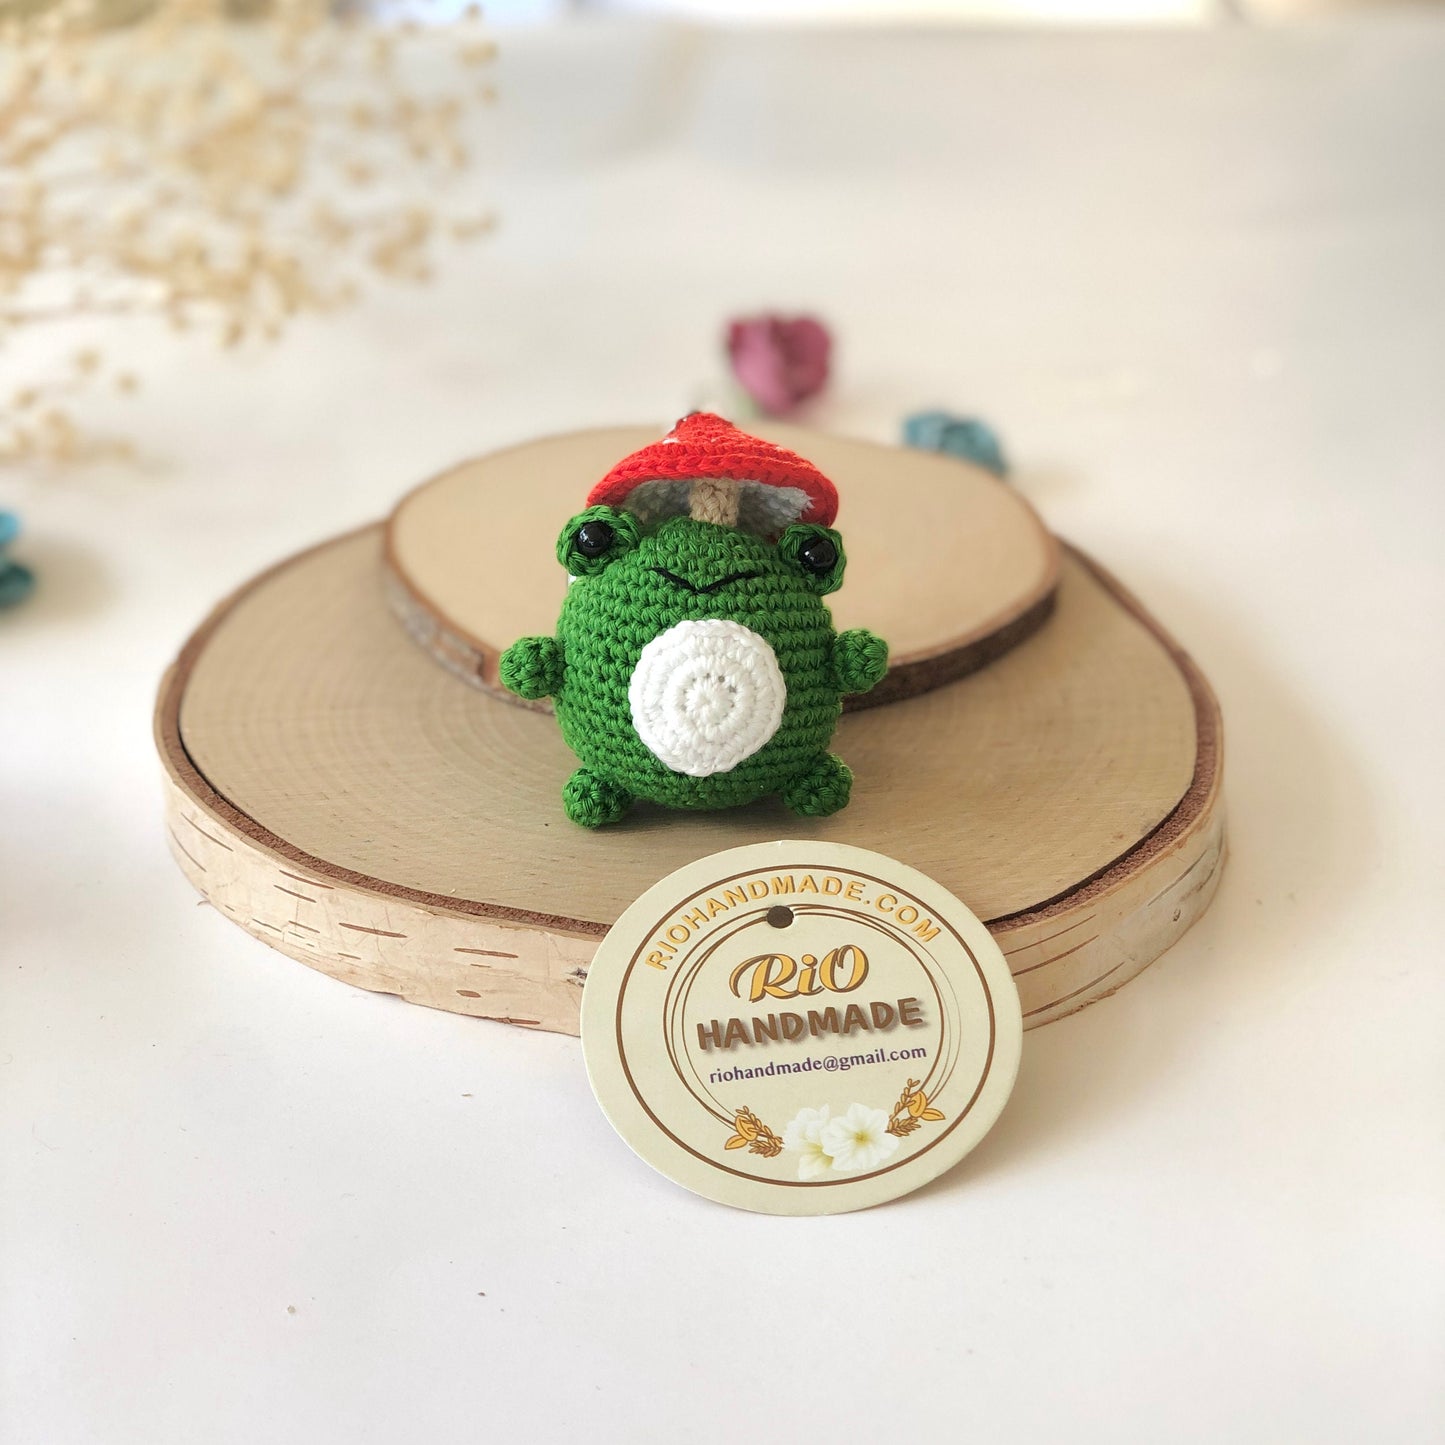 Handmade frog with daisy crochet keychain, Crochet frog with mushroom, amigurumi frog, ornament, home decor, gift, car hanging accessory